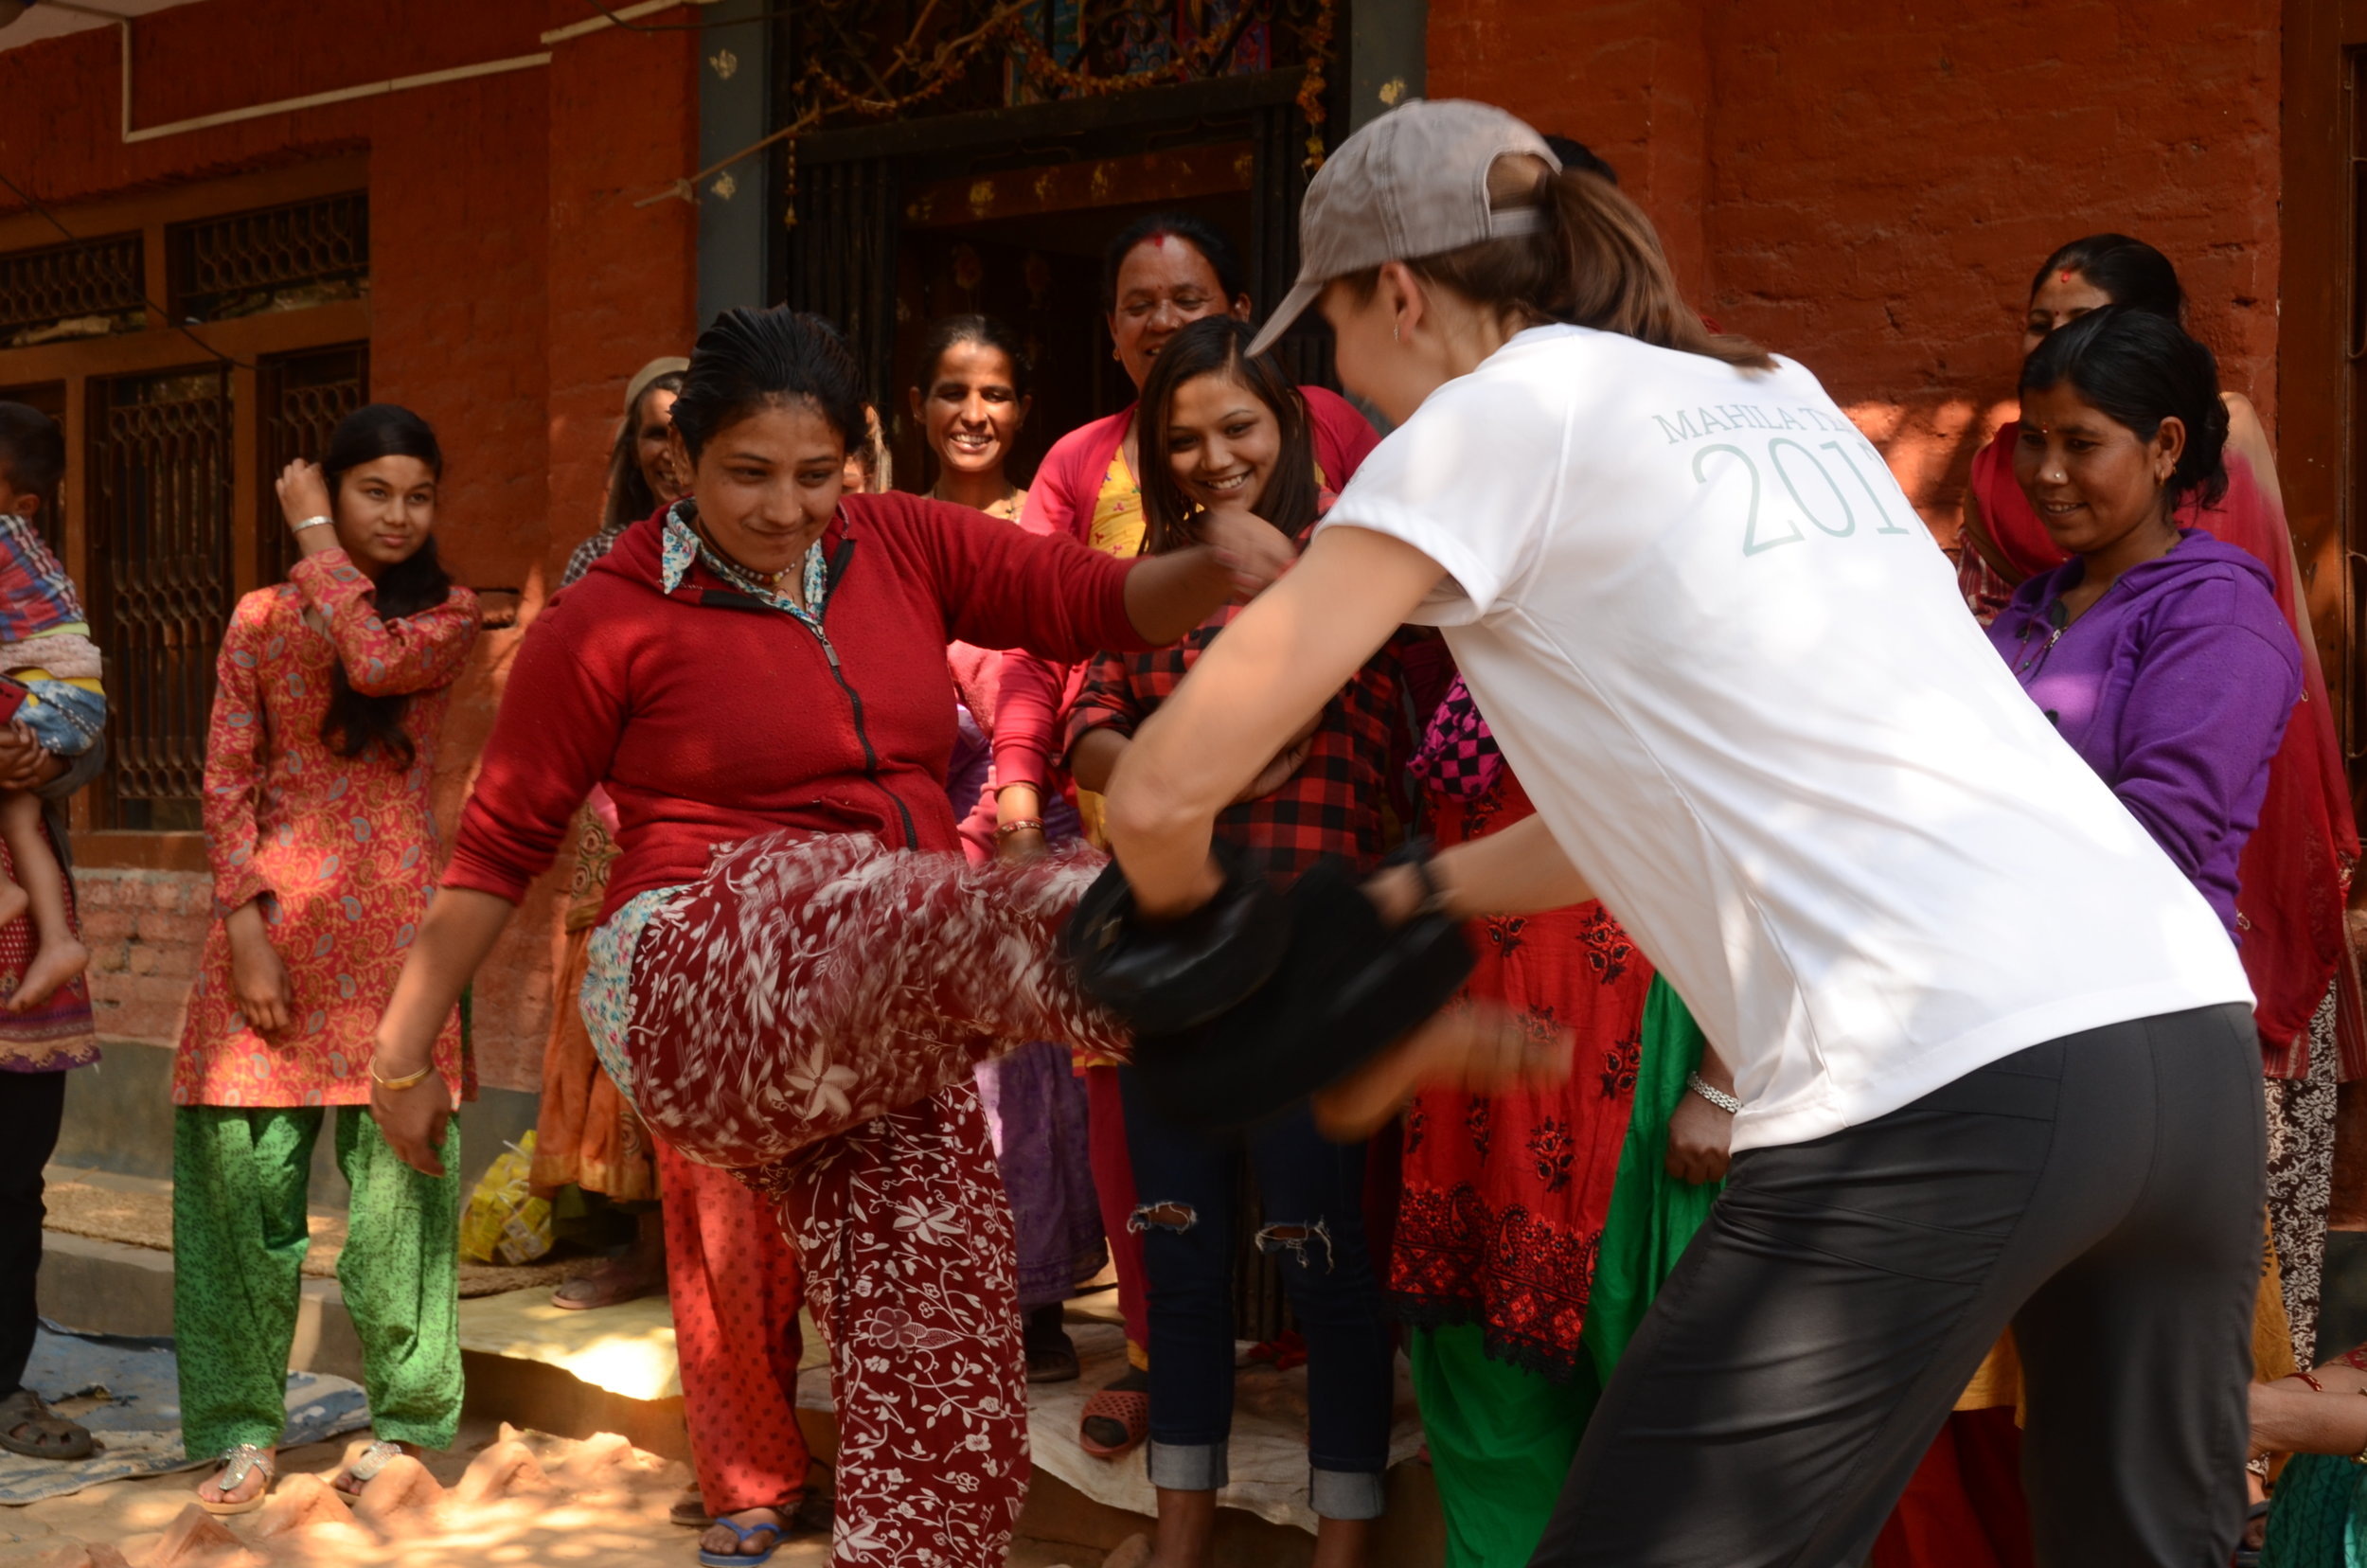 Teaching Self-Defense in Keragi, Nepal